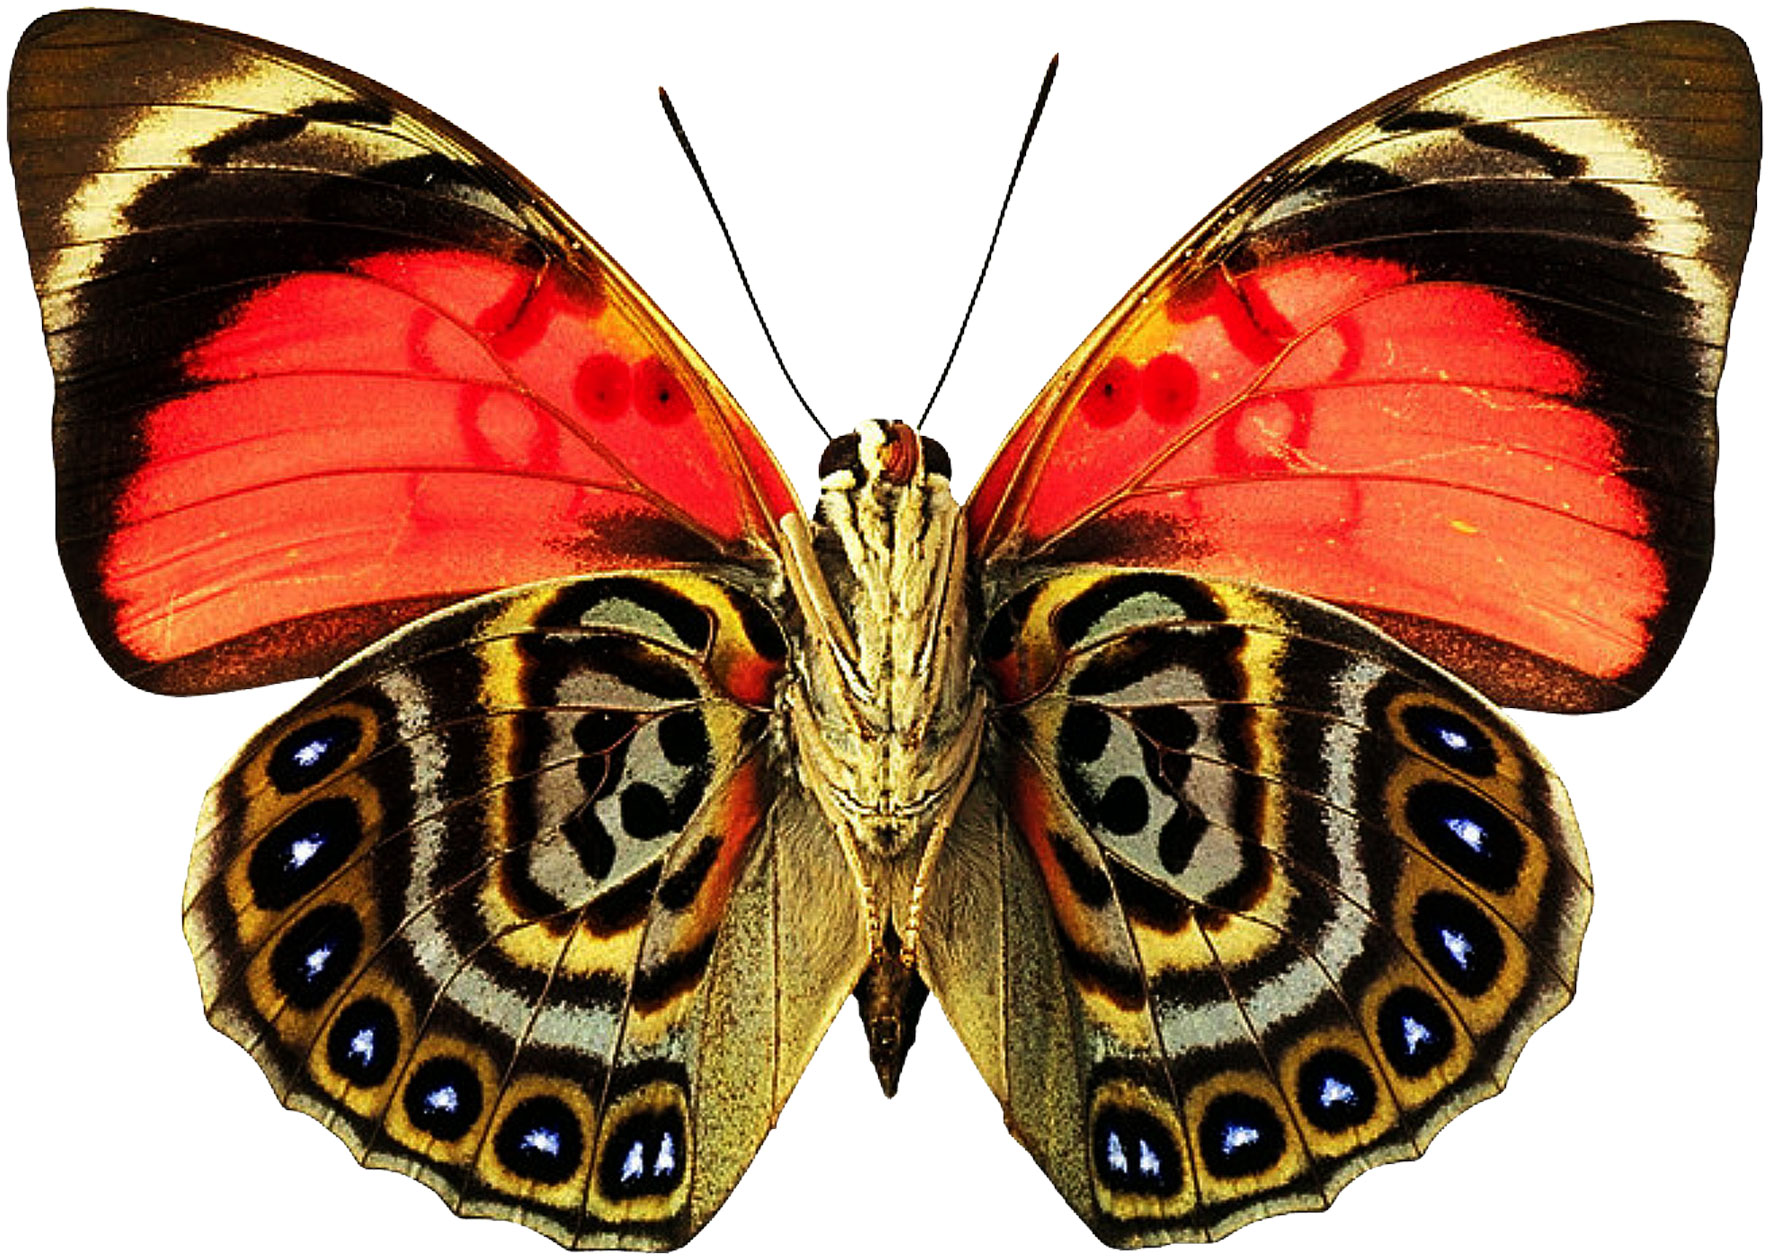 Тропические бабочки на прозрачном фоне